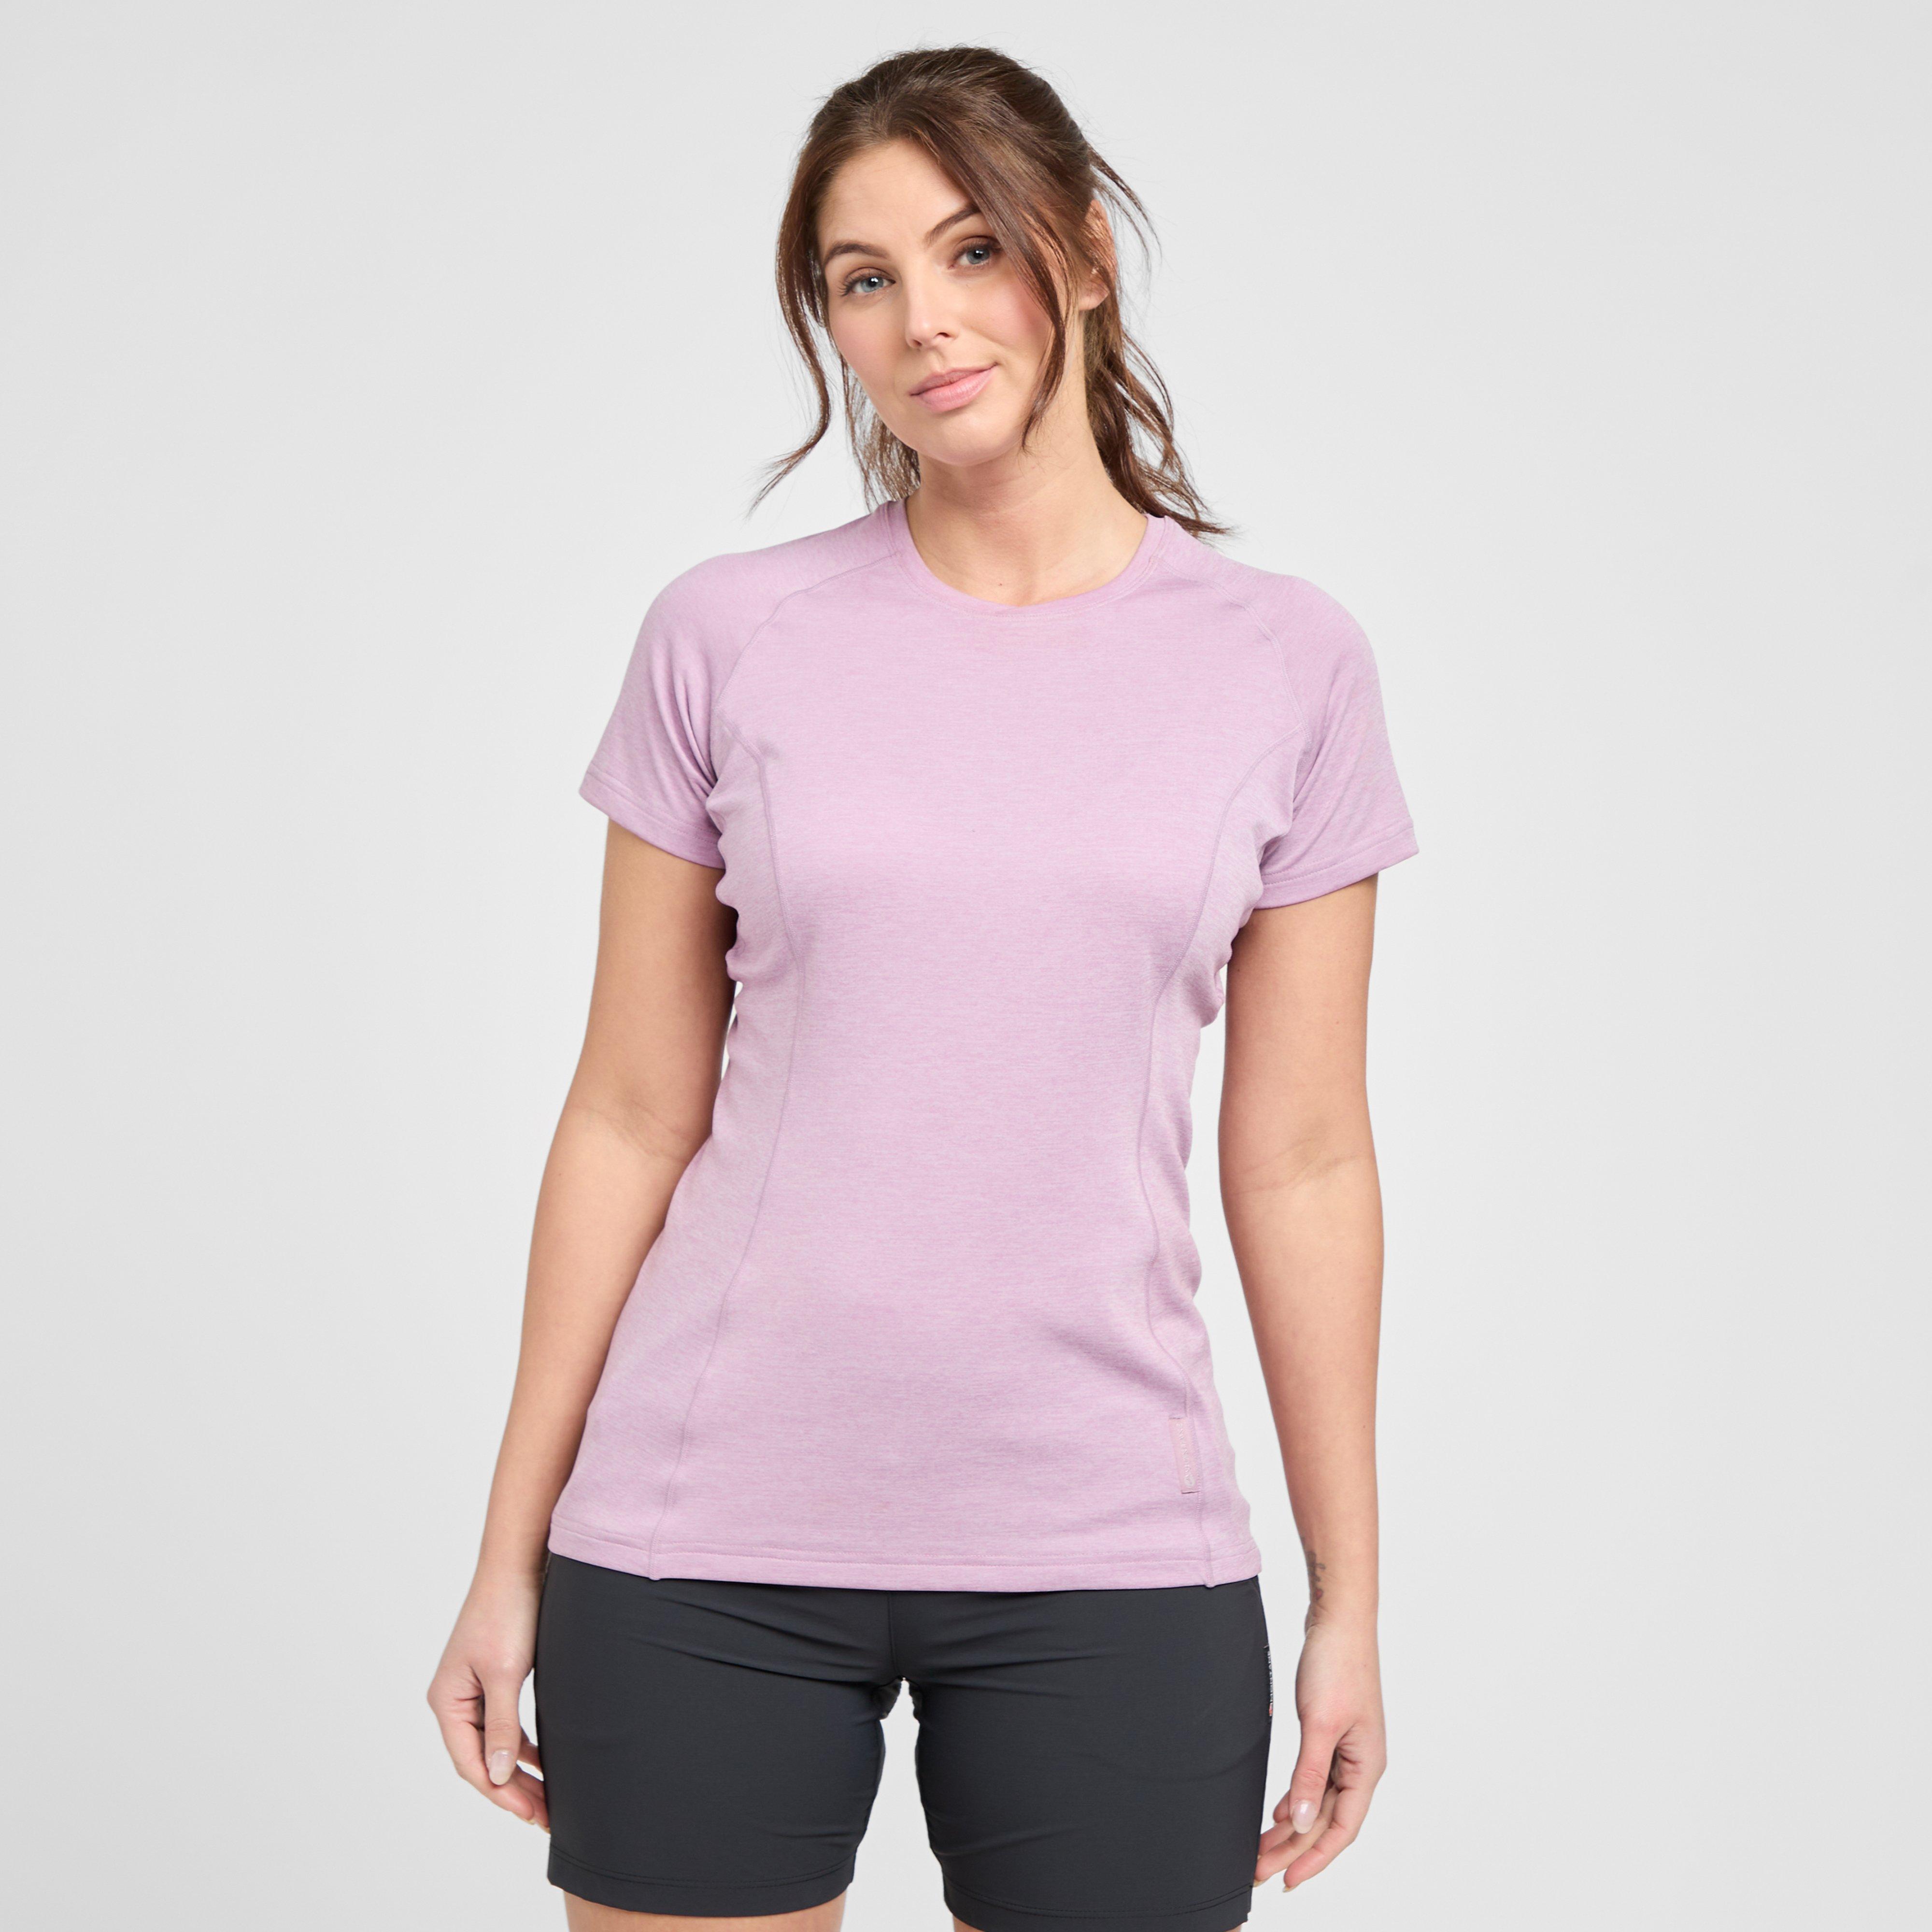 montane women's dart short sleeve t-shirt - lilac, lilac